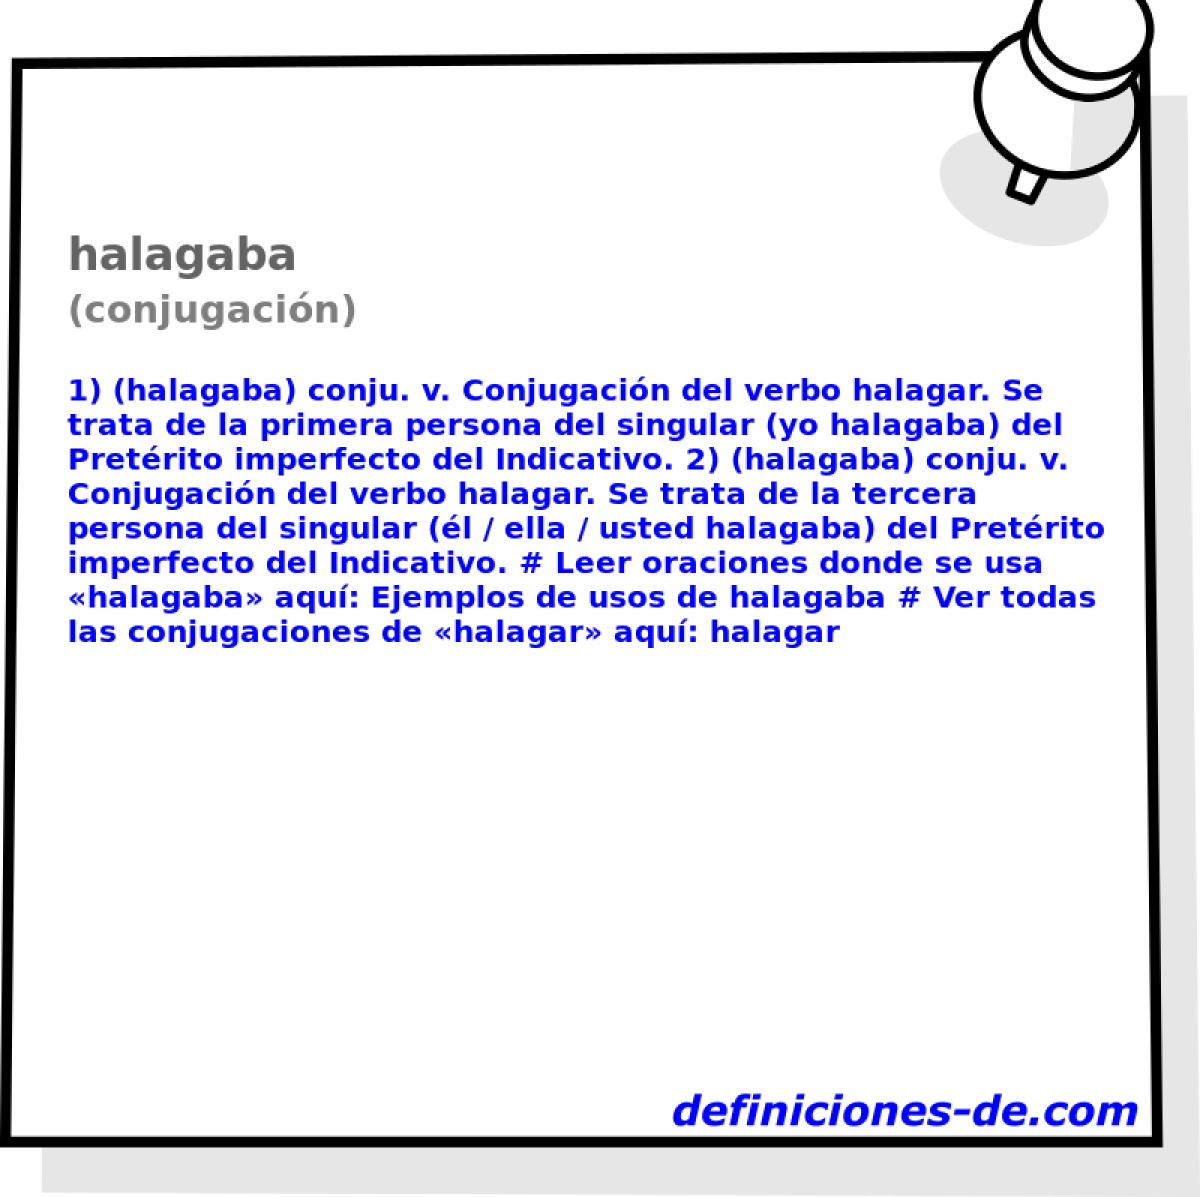 halagaba (conjugacin)